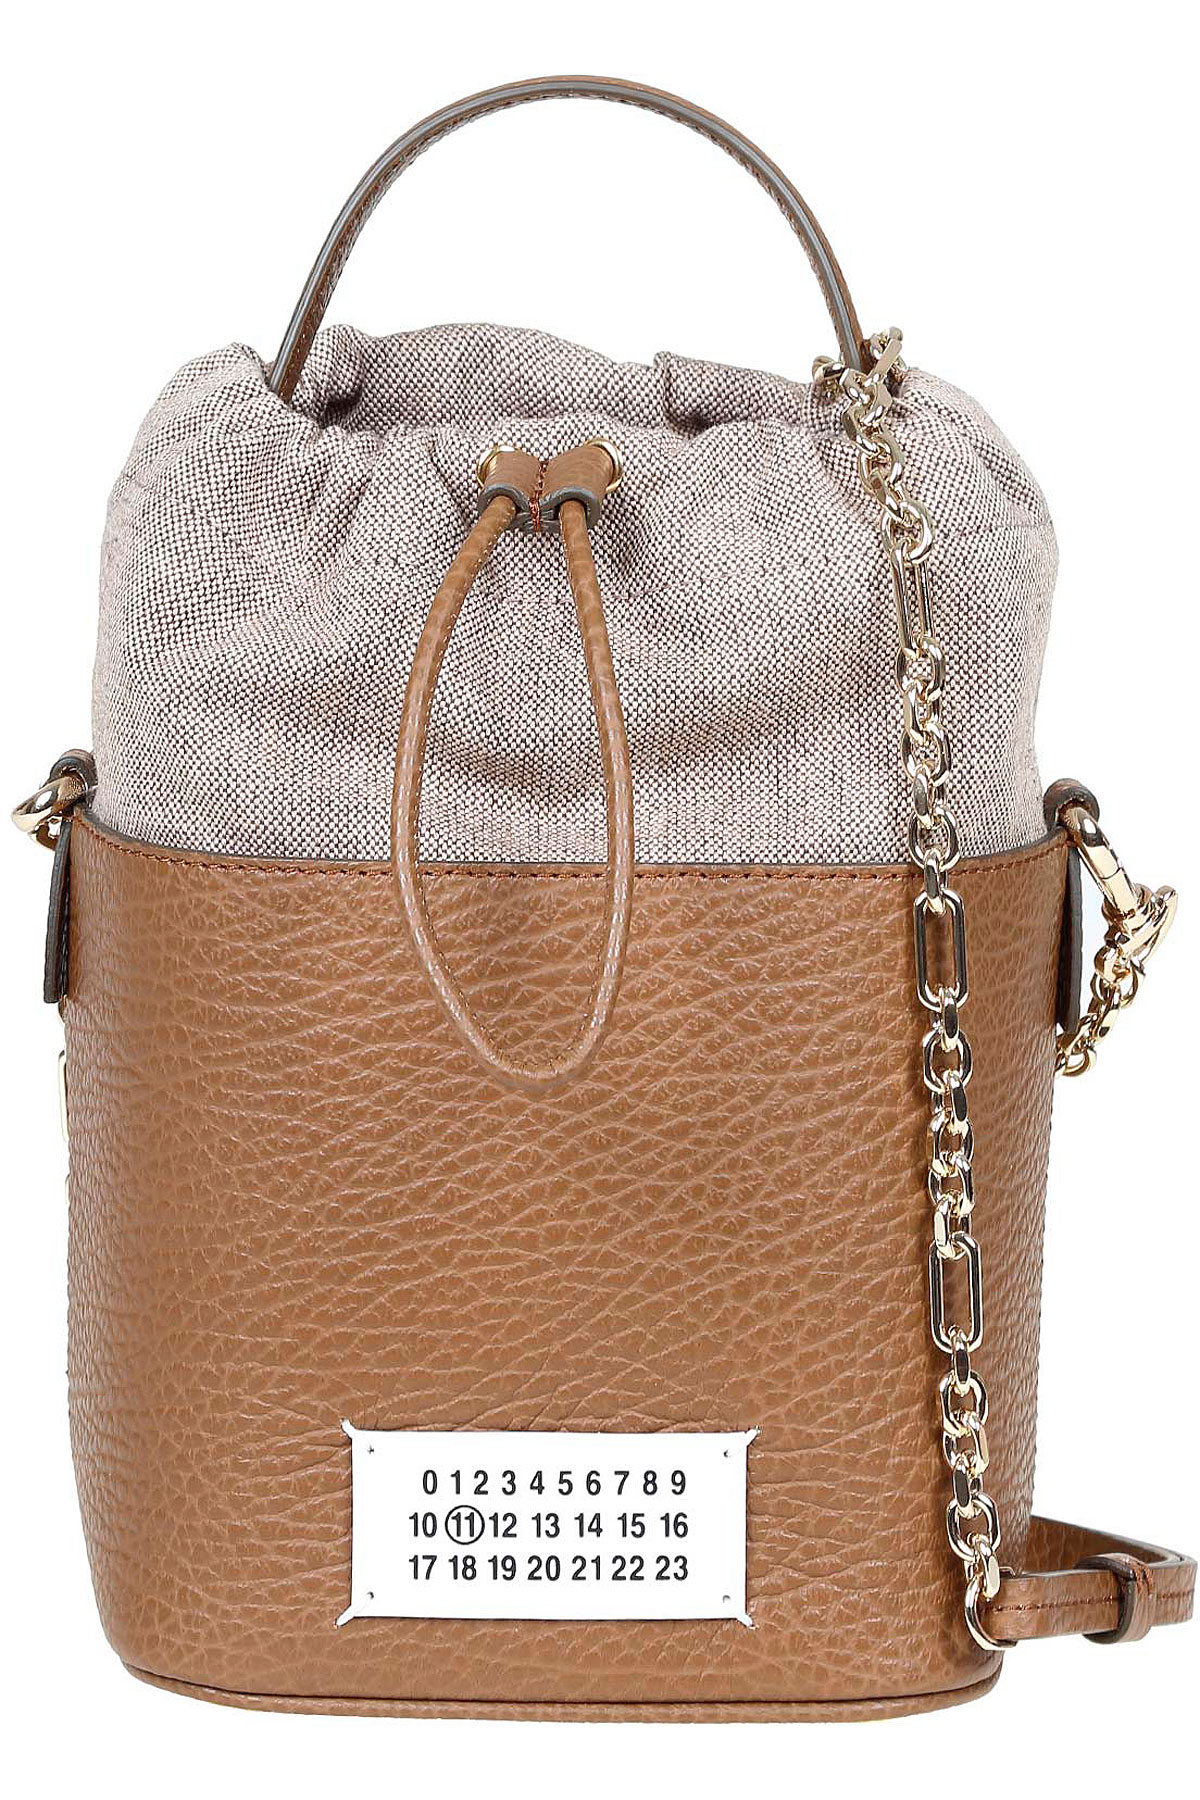 Handbags Maison Margiela, Style code: s61wg0035-p4348-t2160